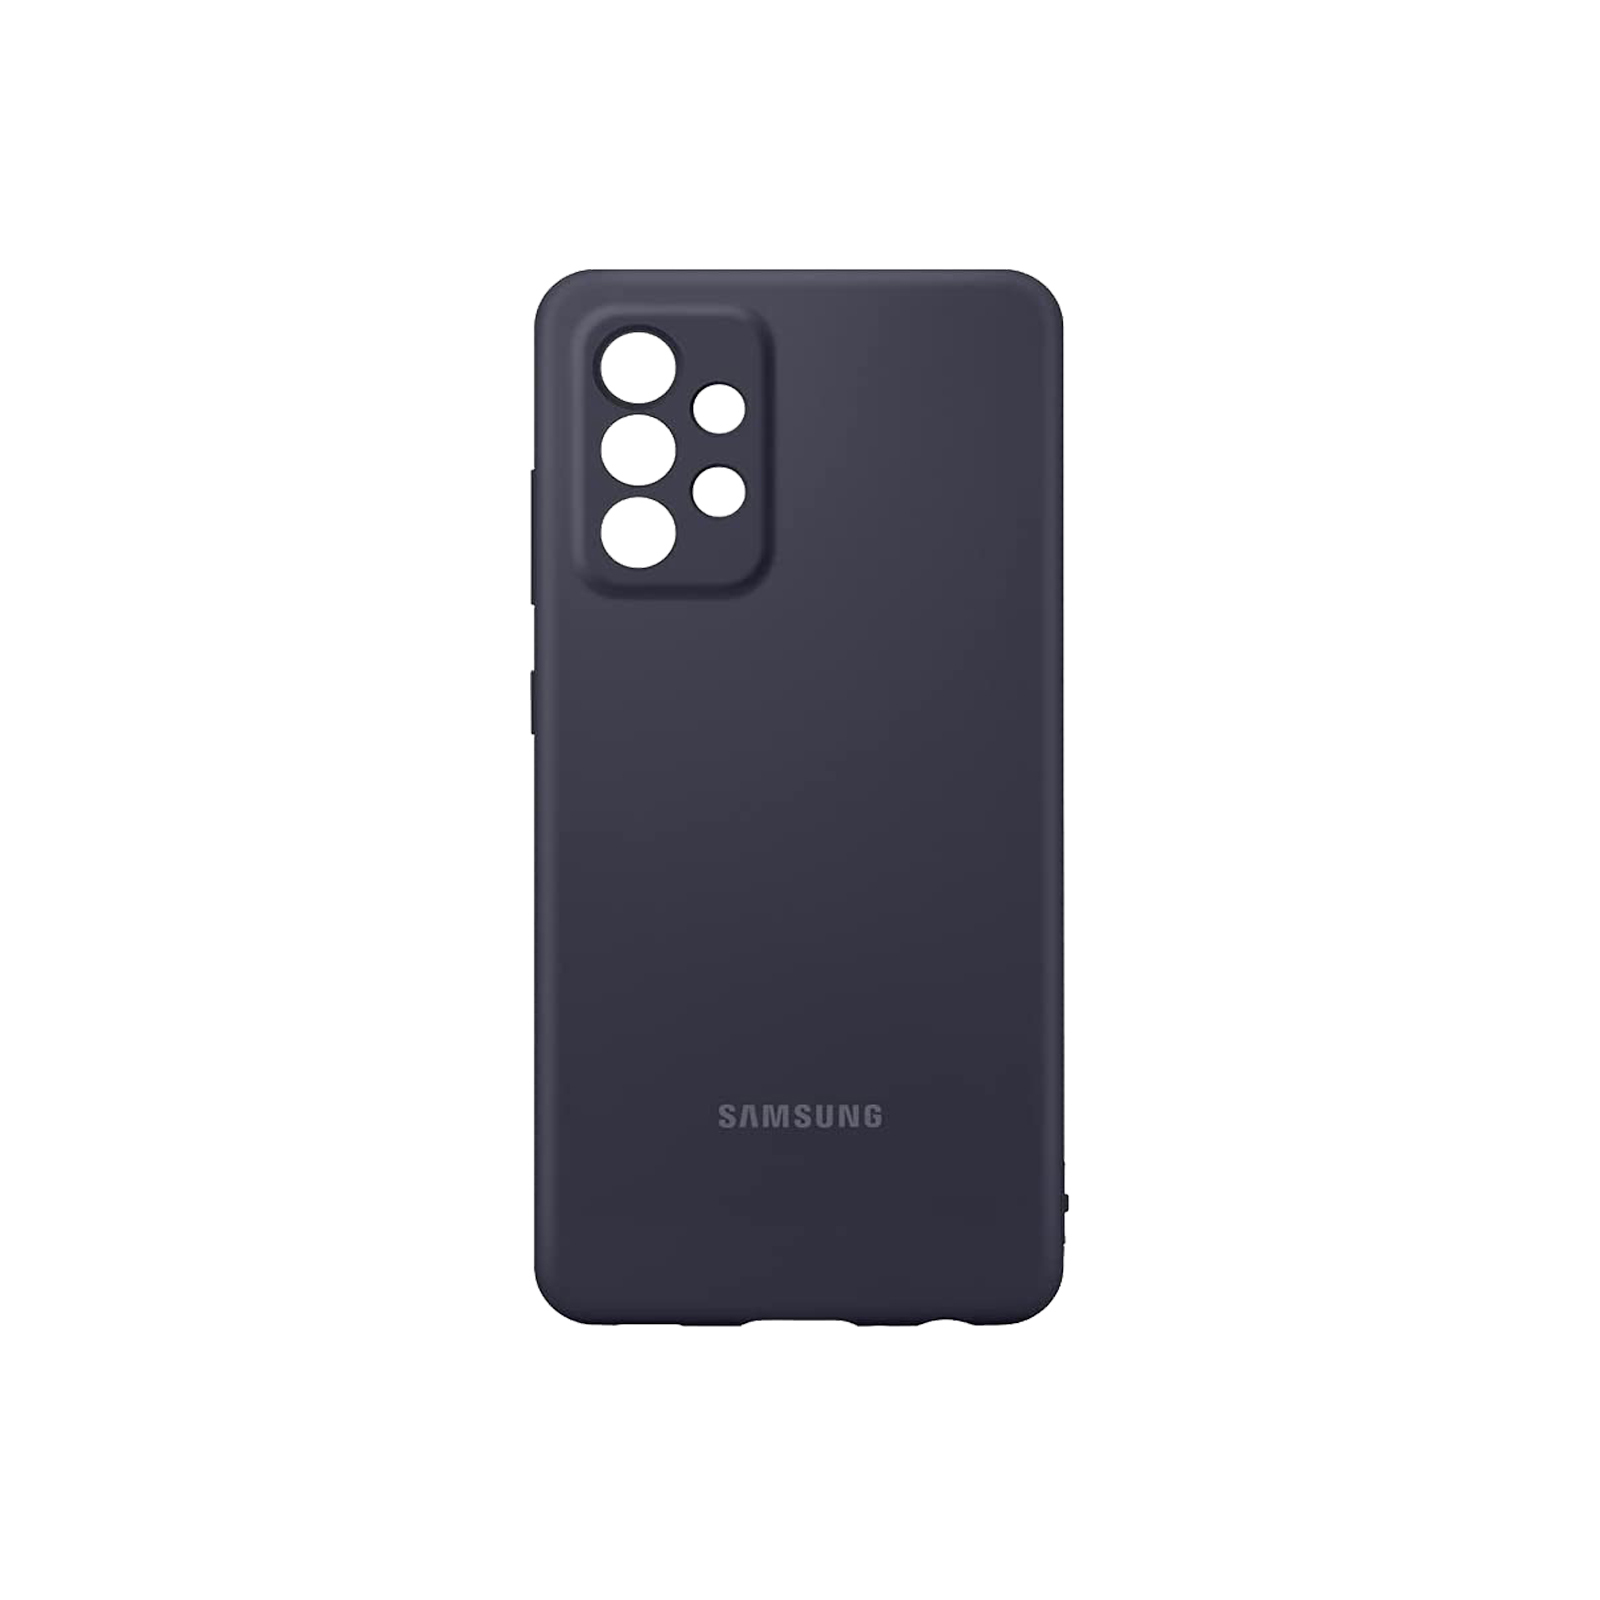 Samsung Galaxy A52 Silicone Cover Black [Brand New]